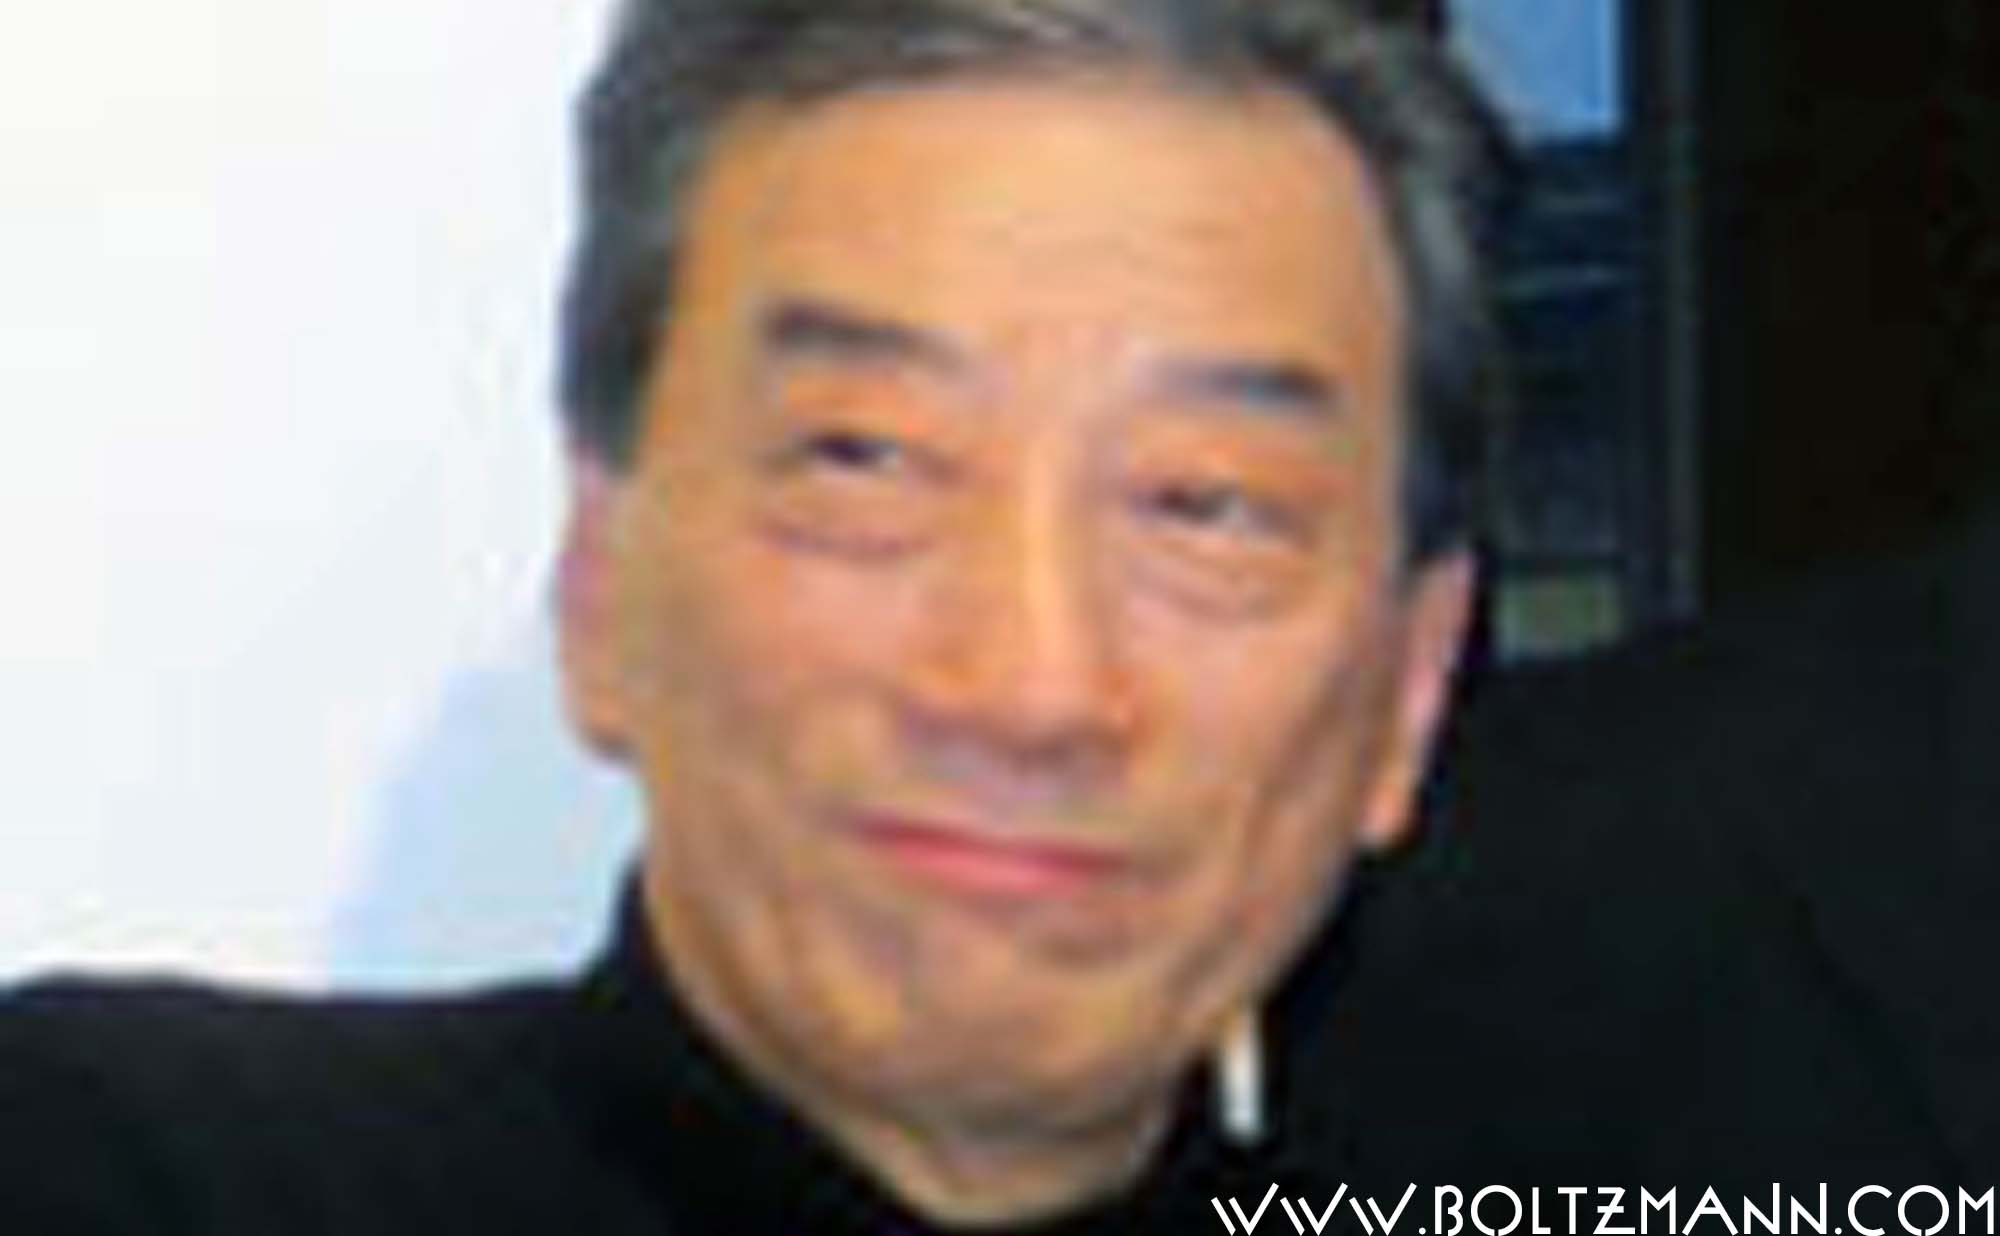 Groupthink can kill - Fukushima Accident Investigation Chairman Kiyoshi Kurokawa